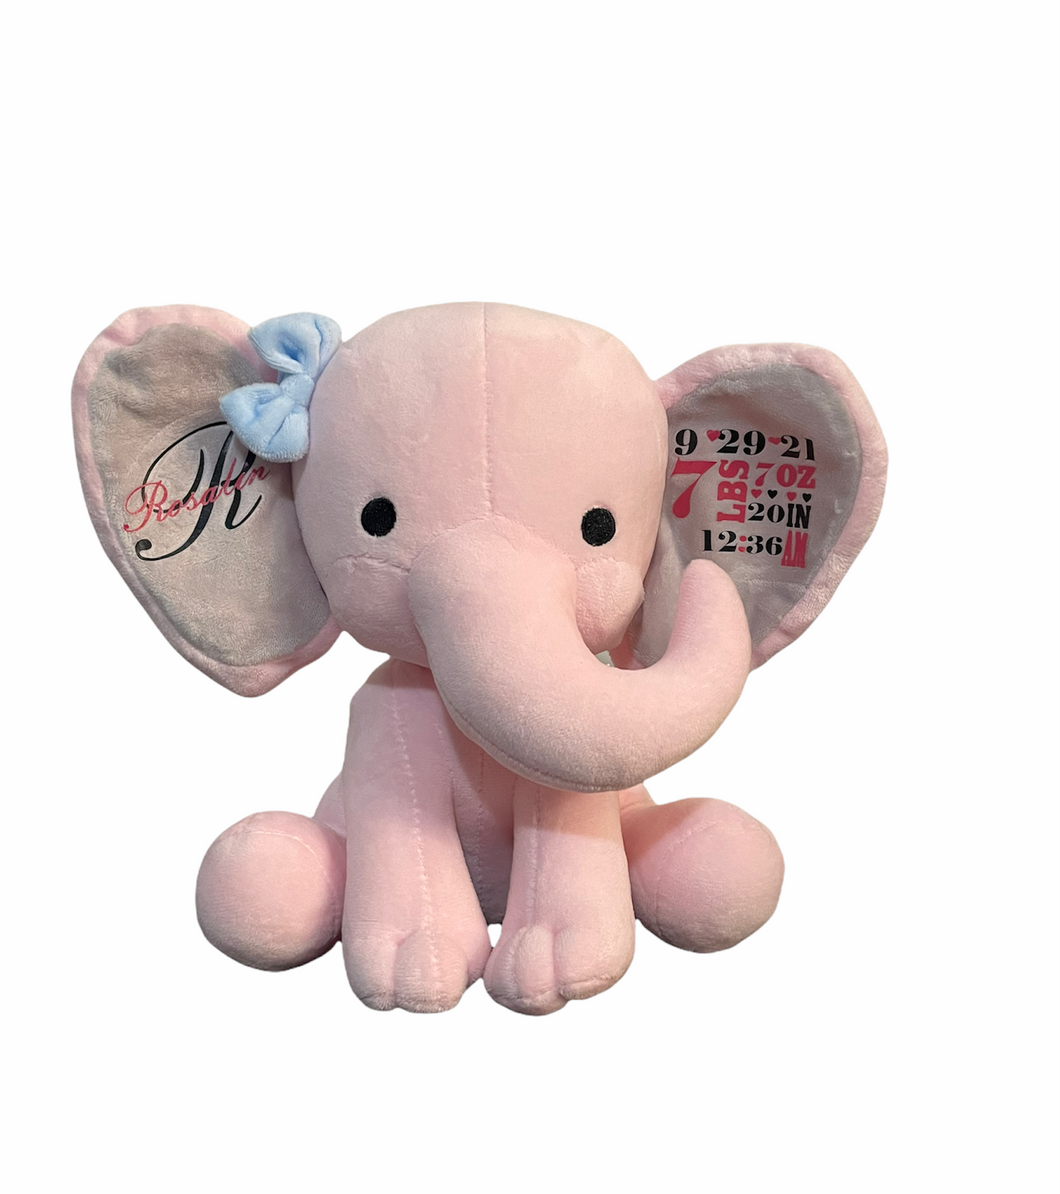 Birth Announcement Plush Elephant